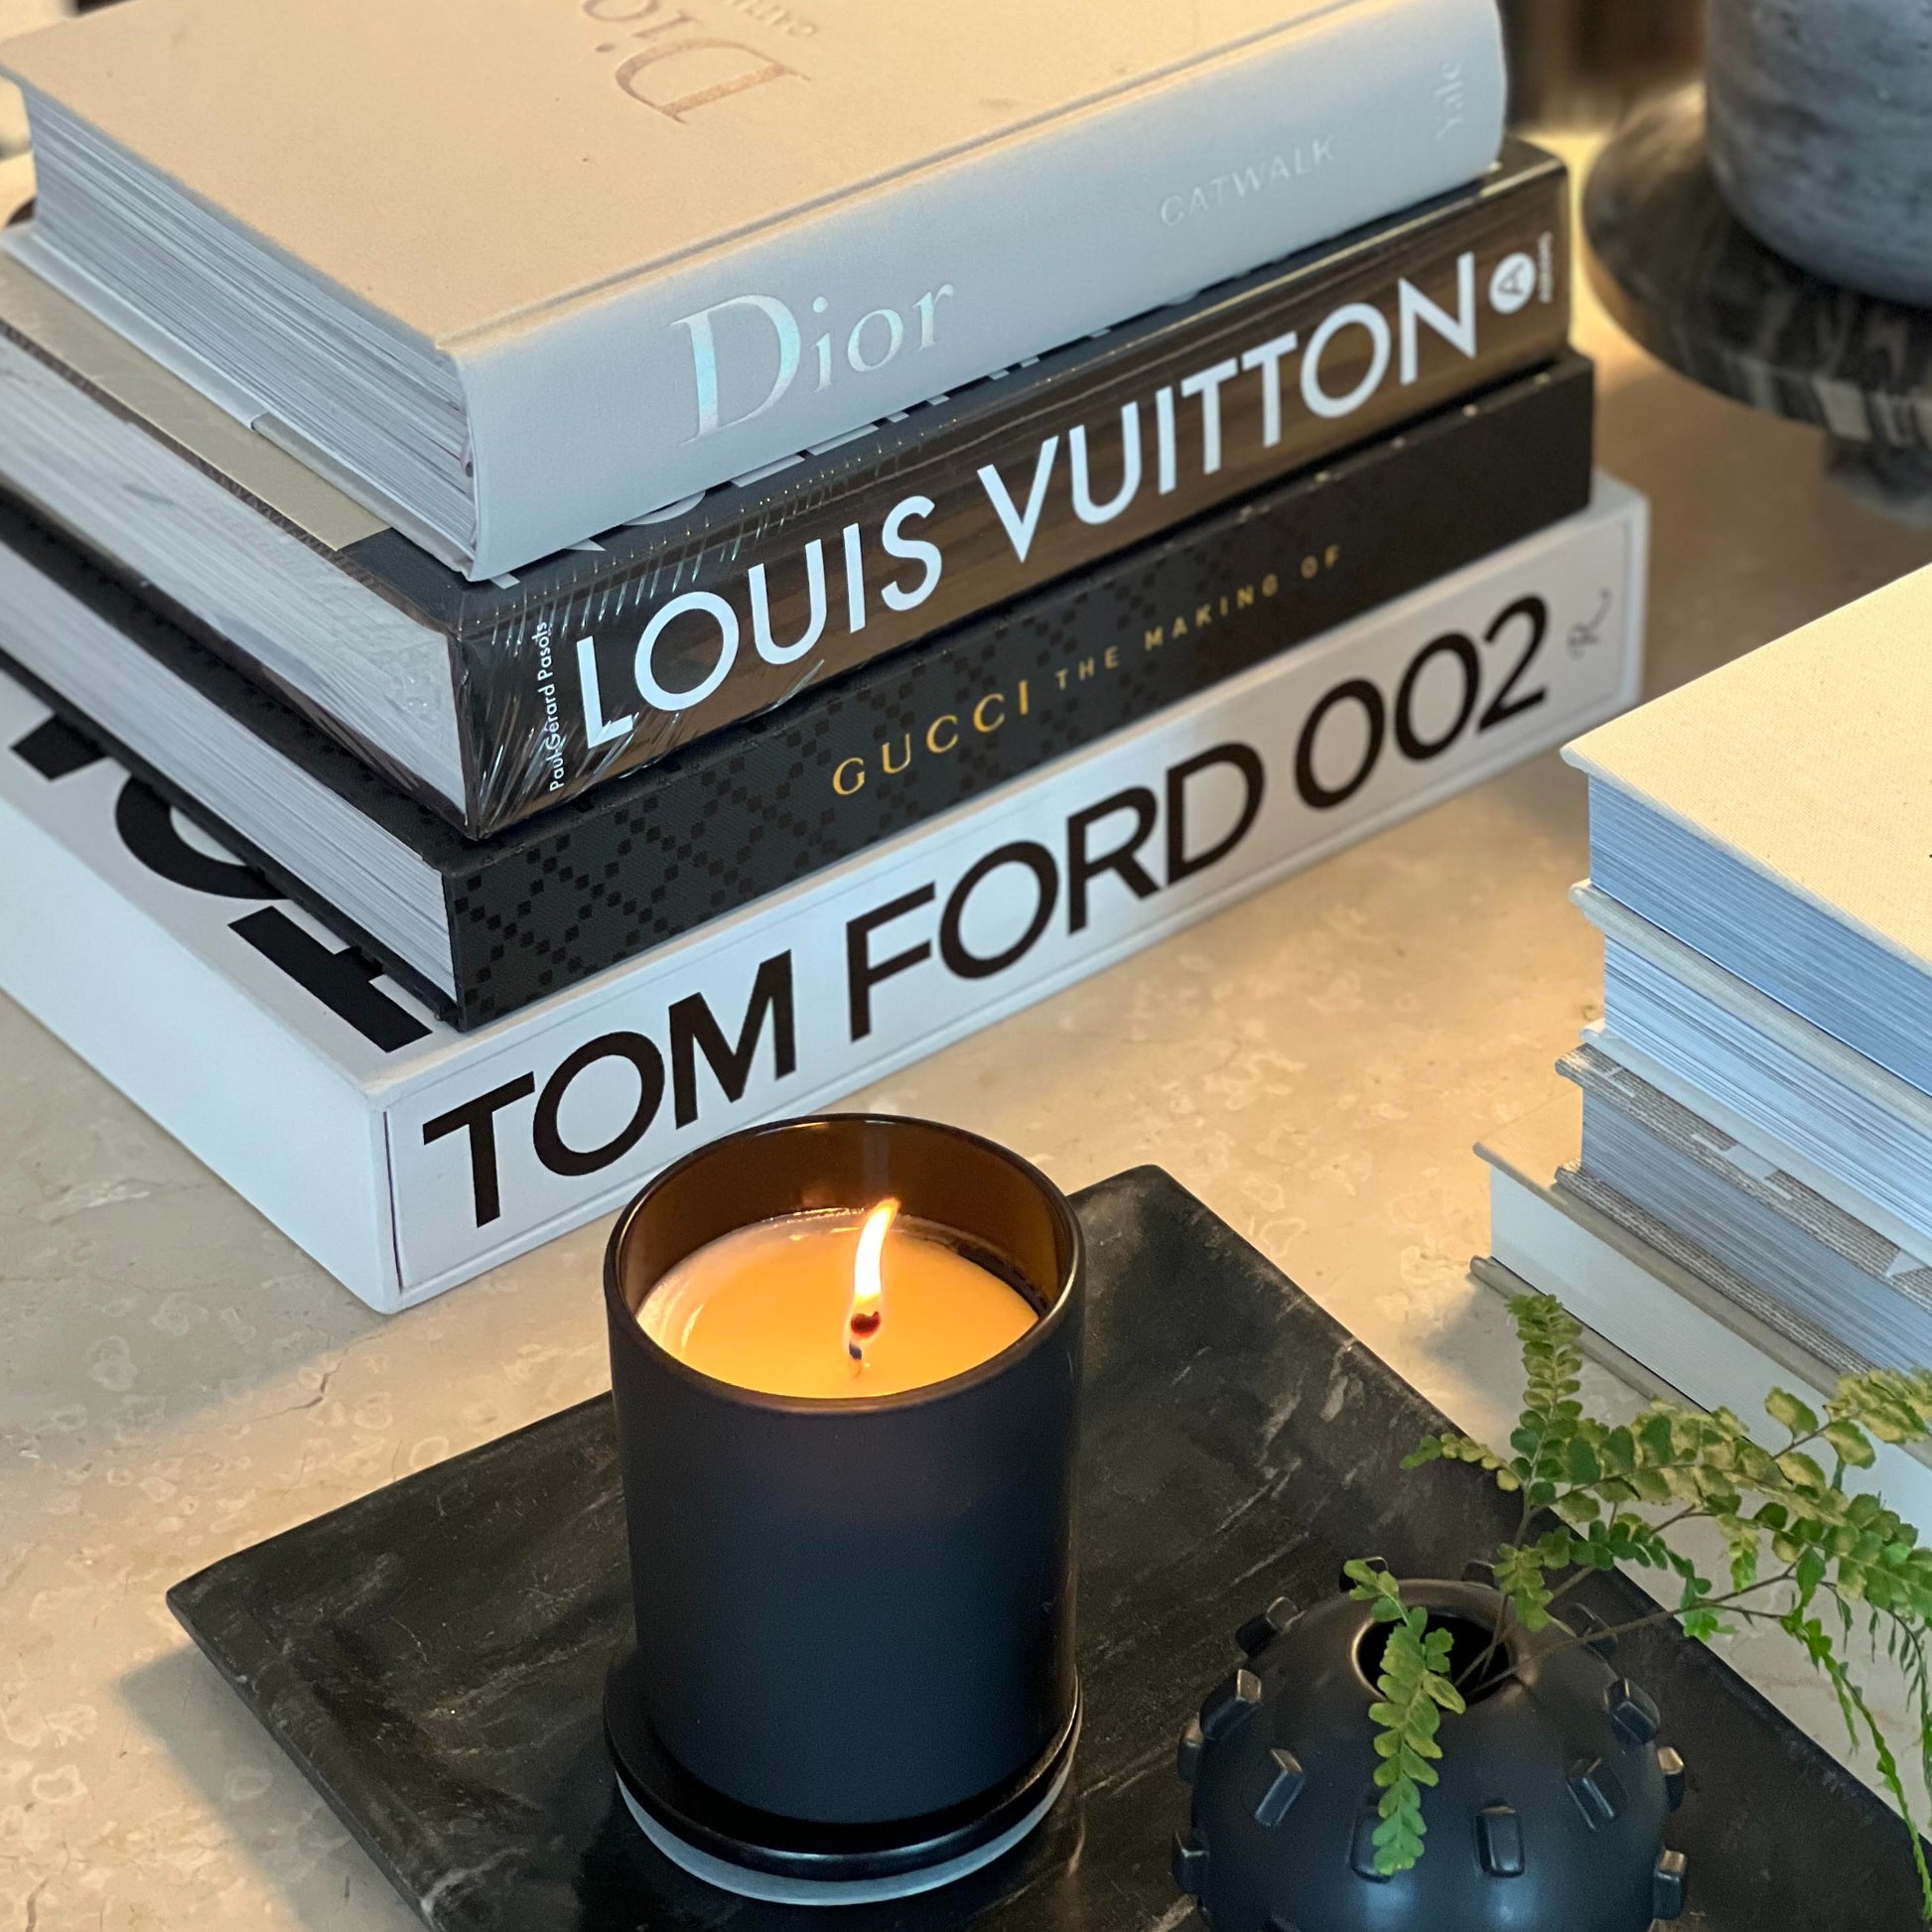 Louis Vuitton Candle  Shopping